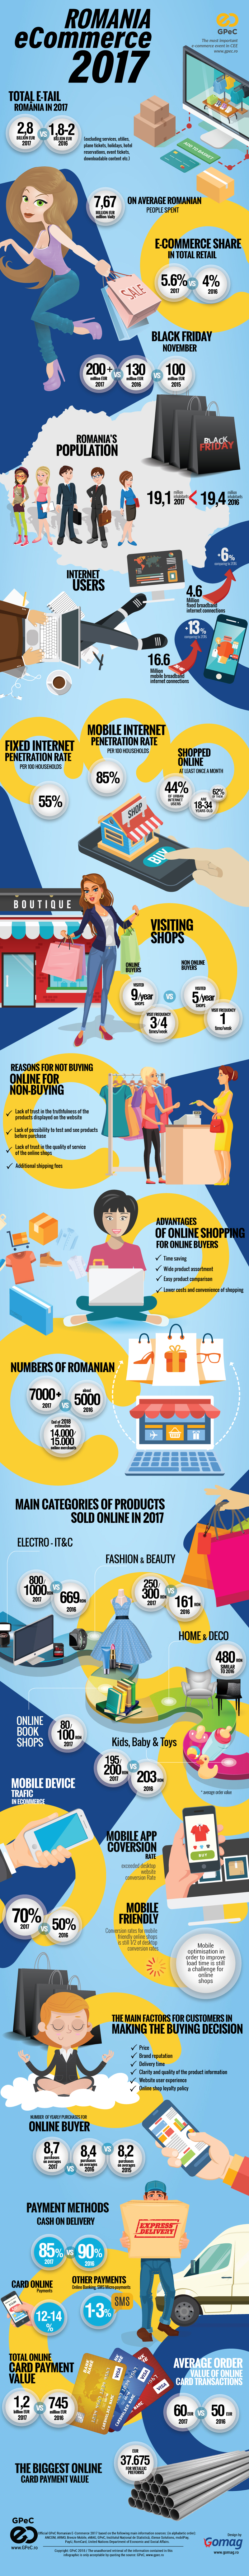 GPeC Romanian E-Commerce Market 2017